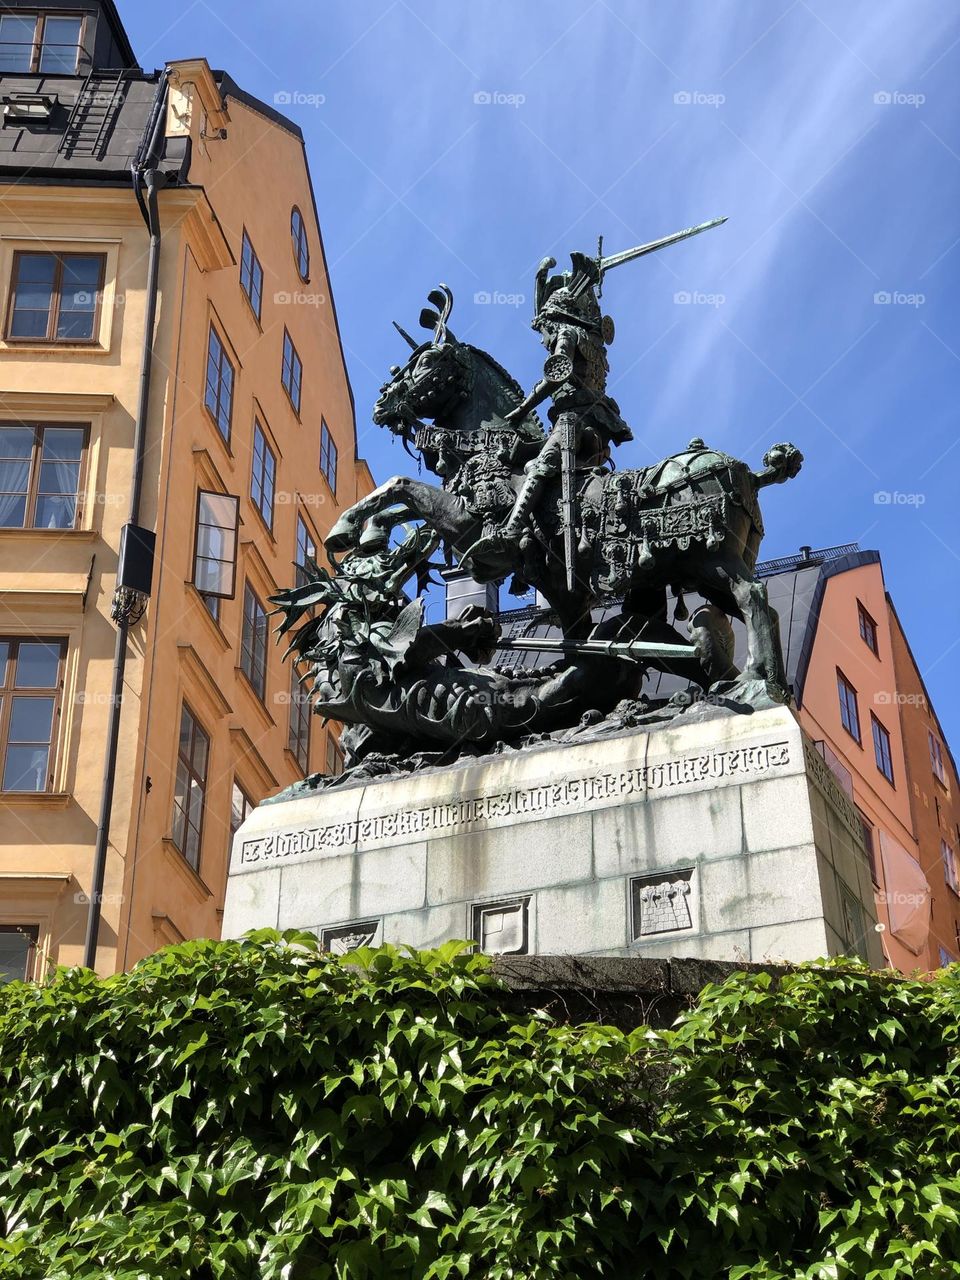 Statue in Old town Stockholm Sweden 